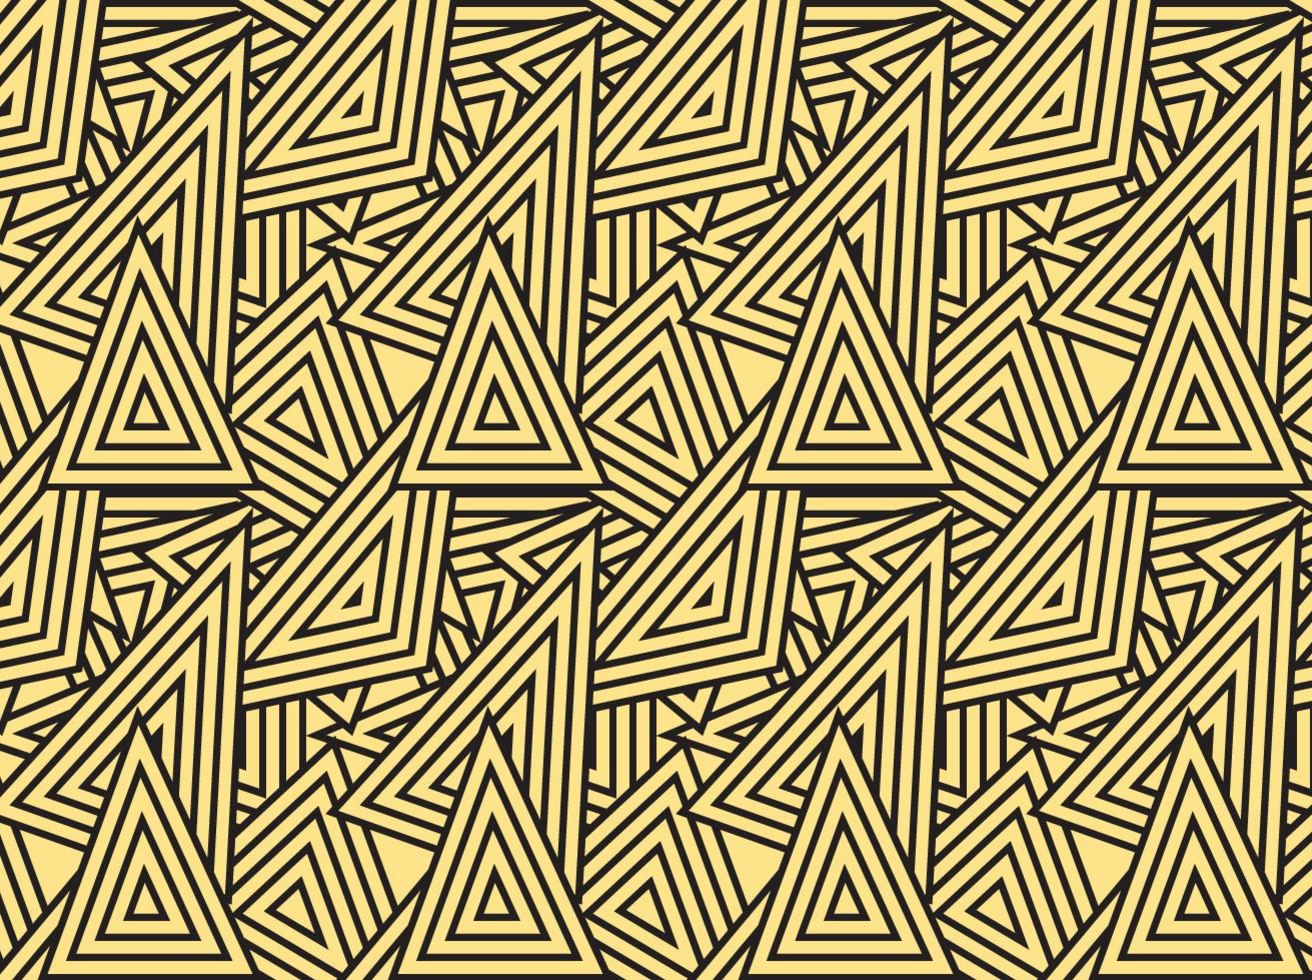 Geometric pattern vector illustration. Abstract modern creative